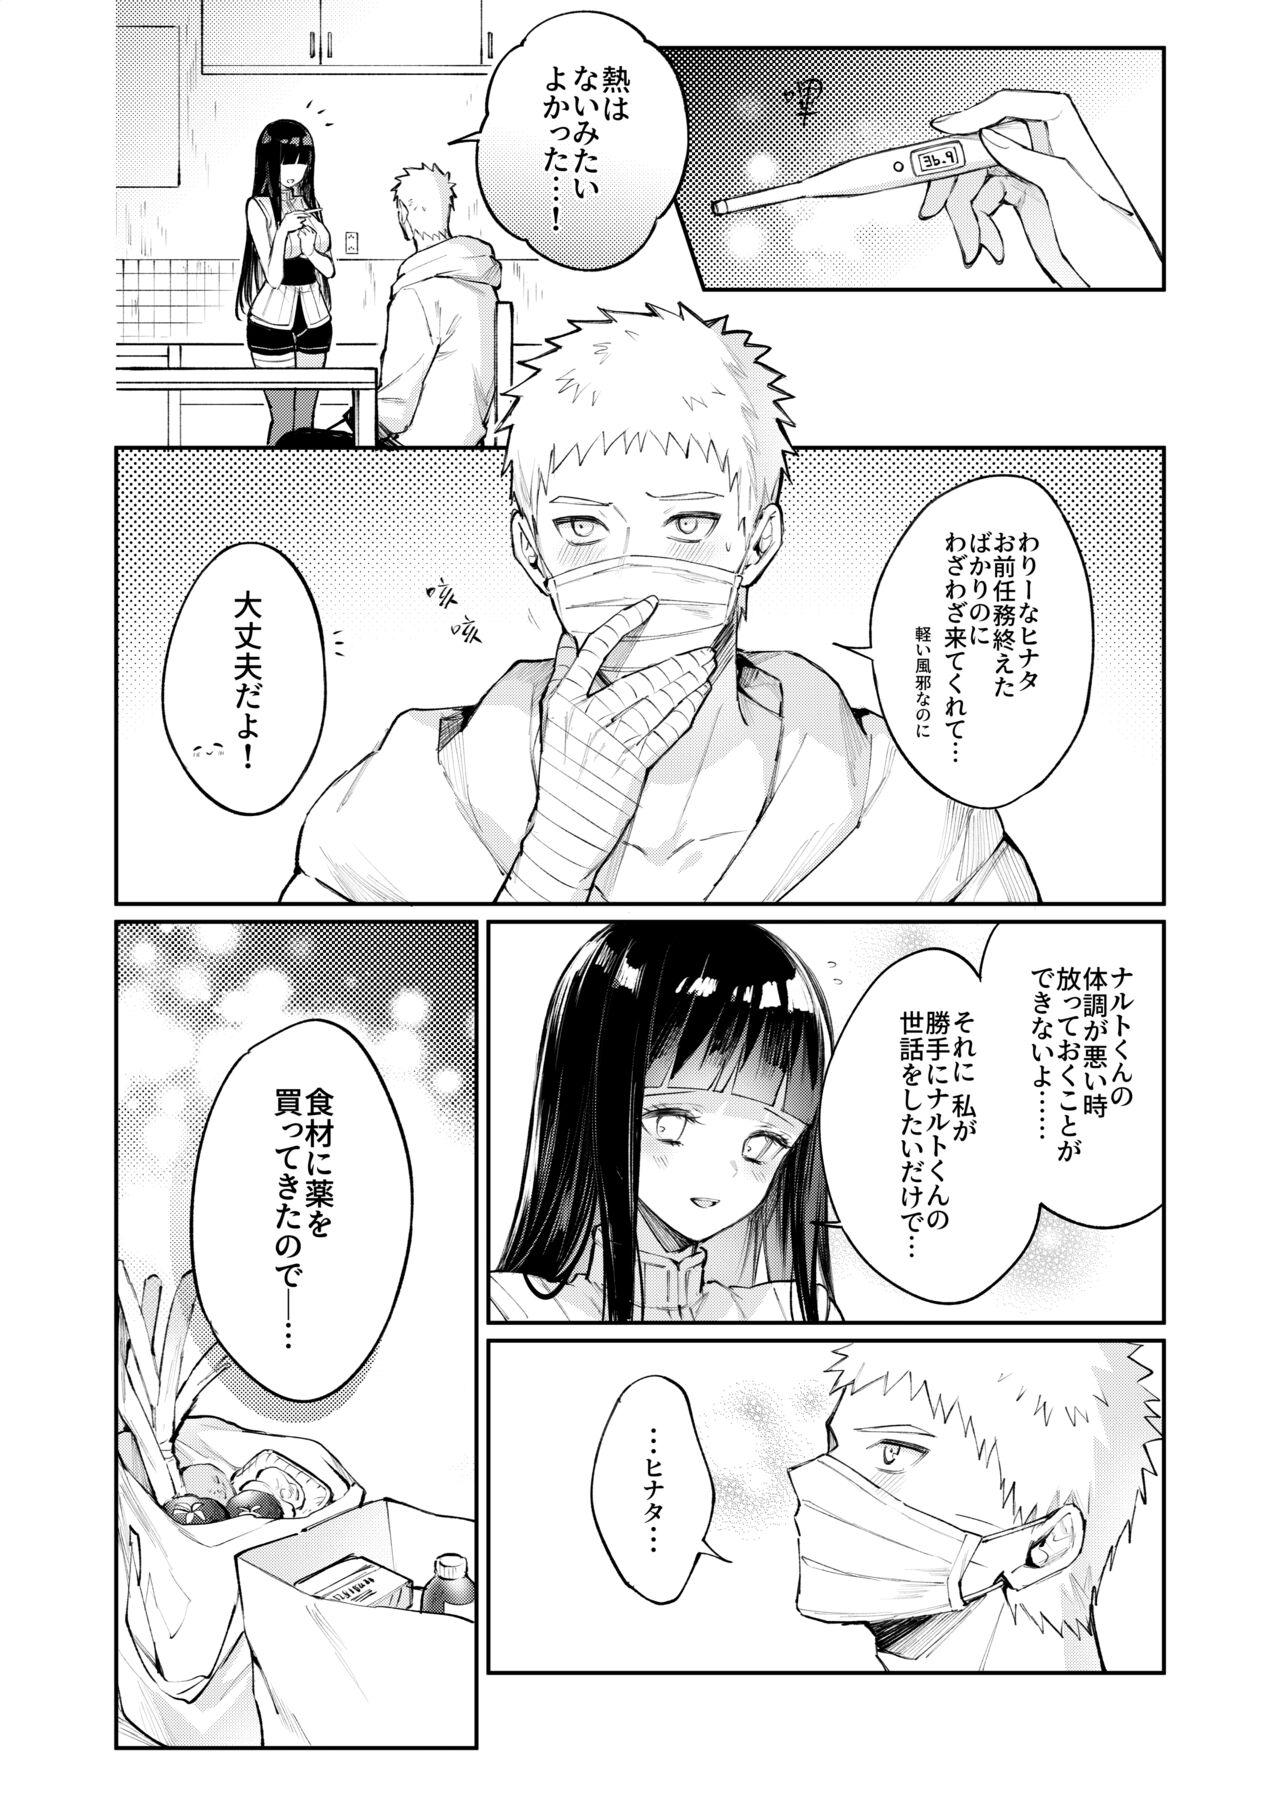 Dad 風邪 - Naruto 8teen - Page 1